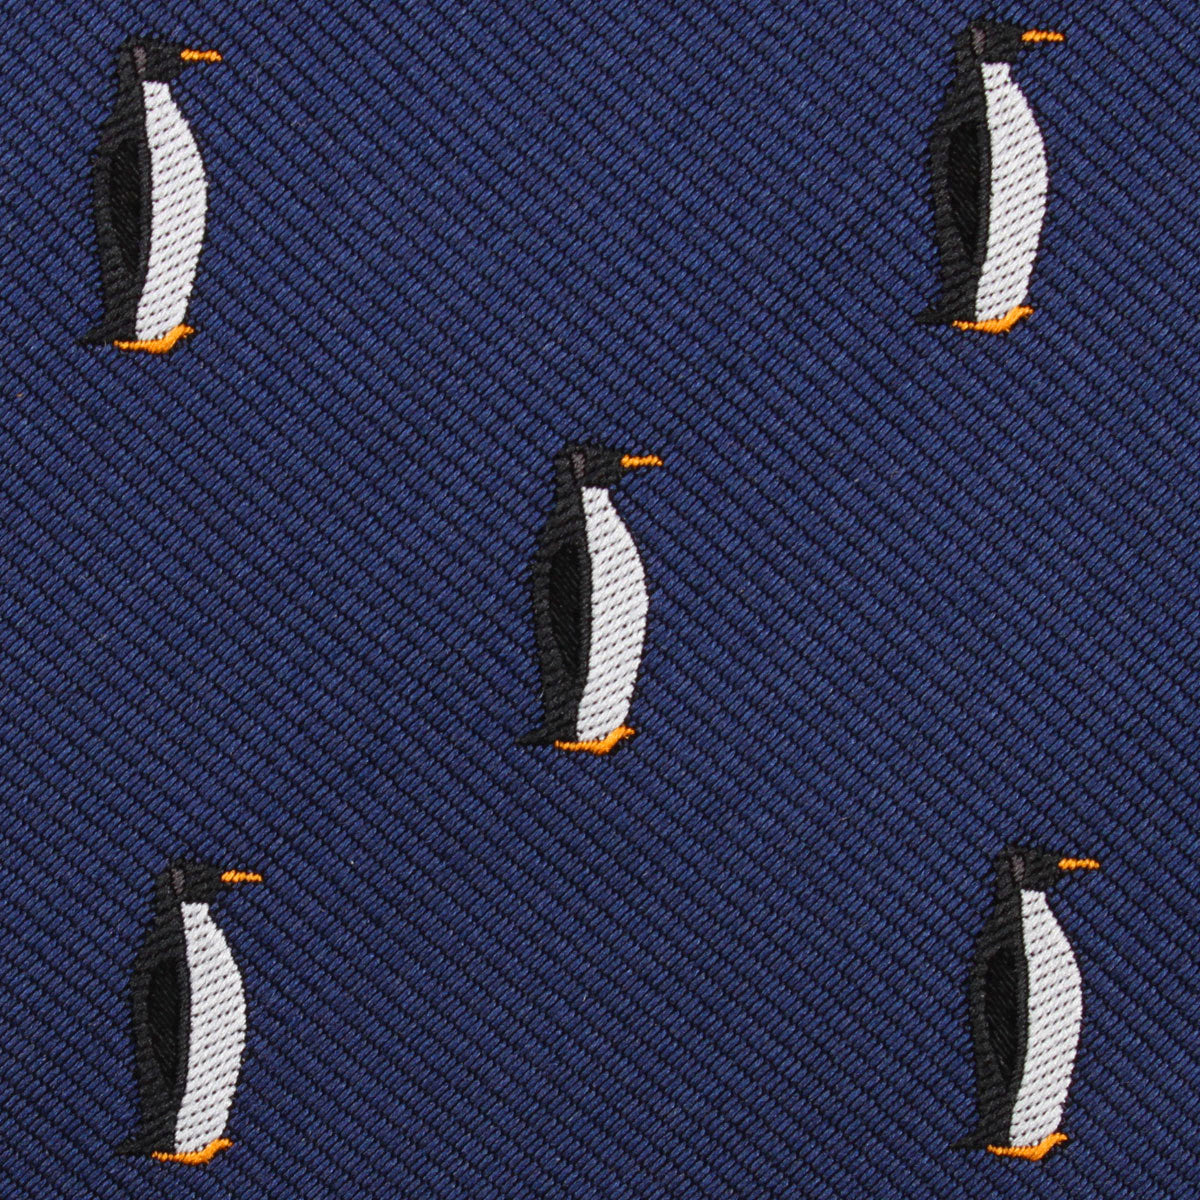 King Penguin Fabric Self Diamond Bowtie